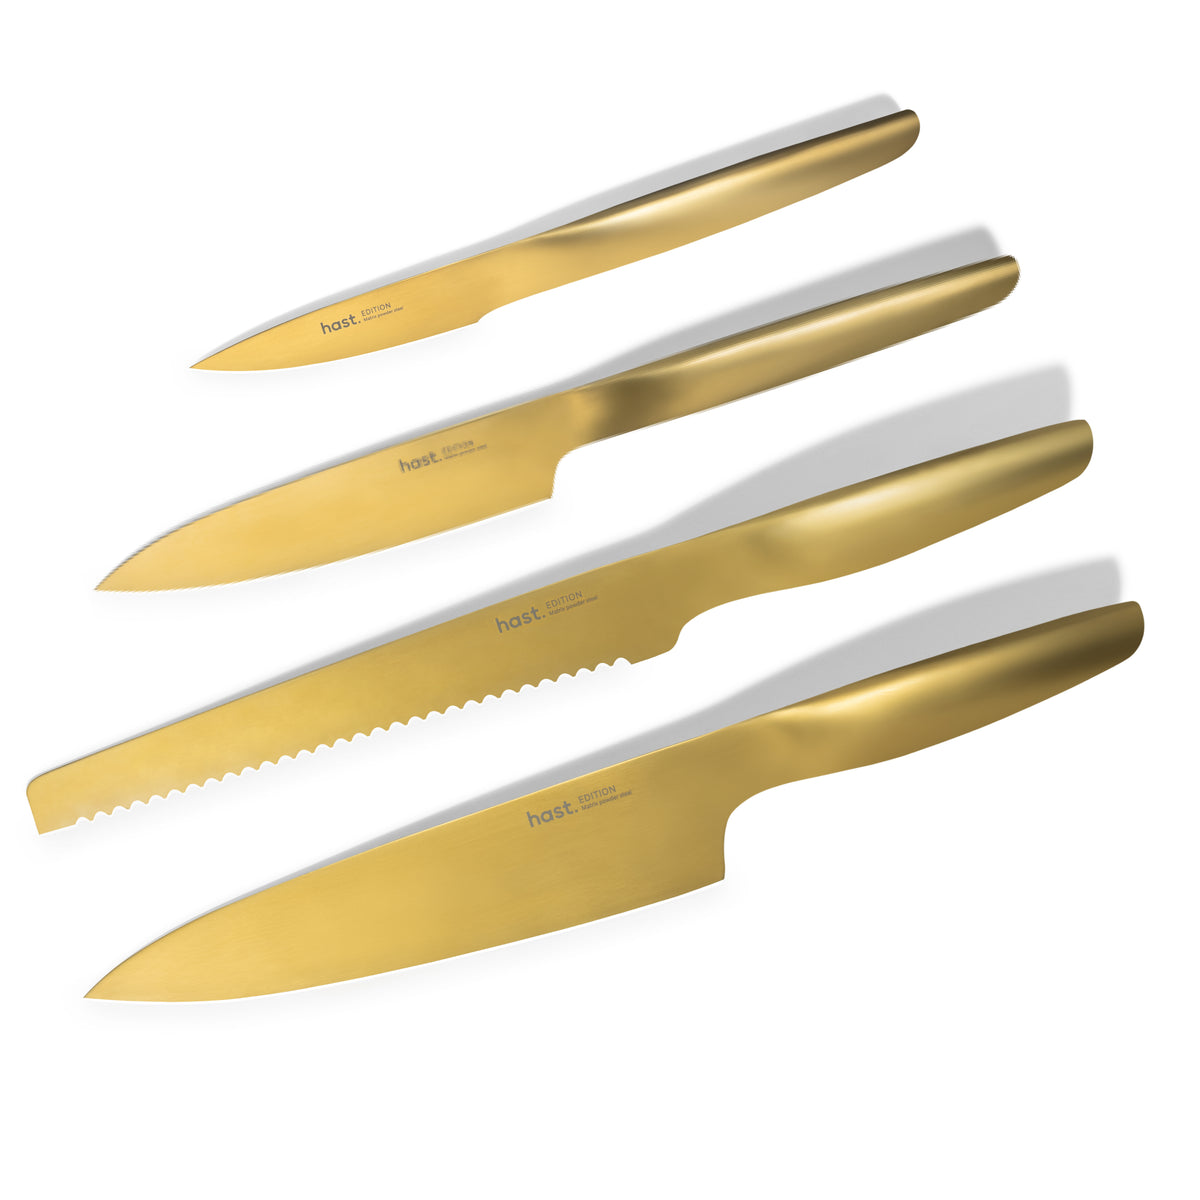 New design stainless steel kitchen knife set chef knife set